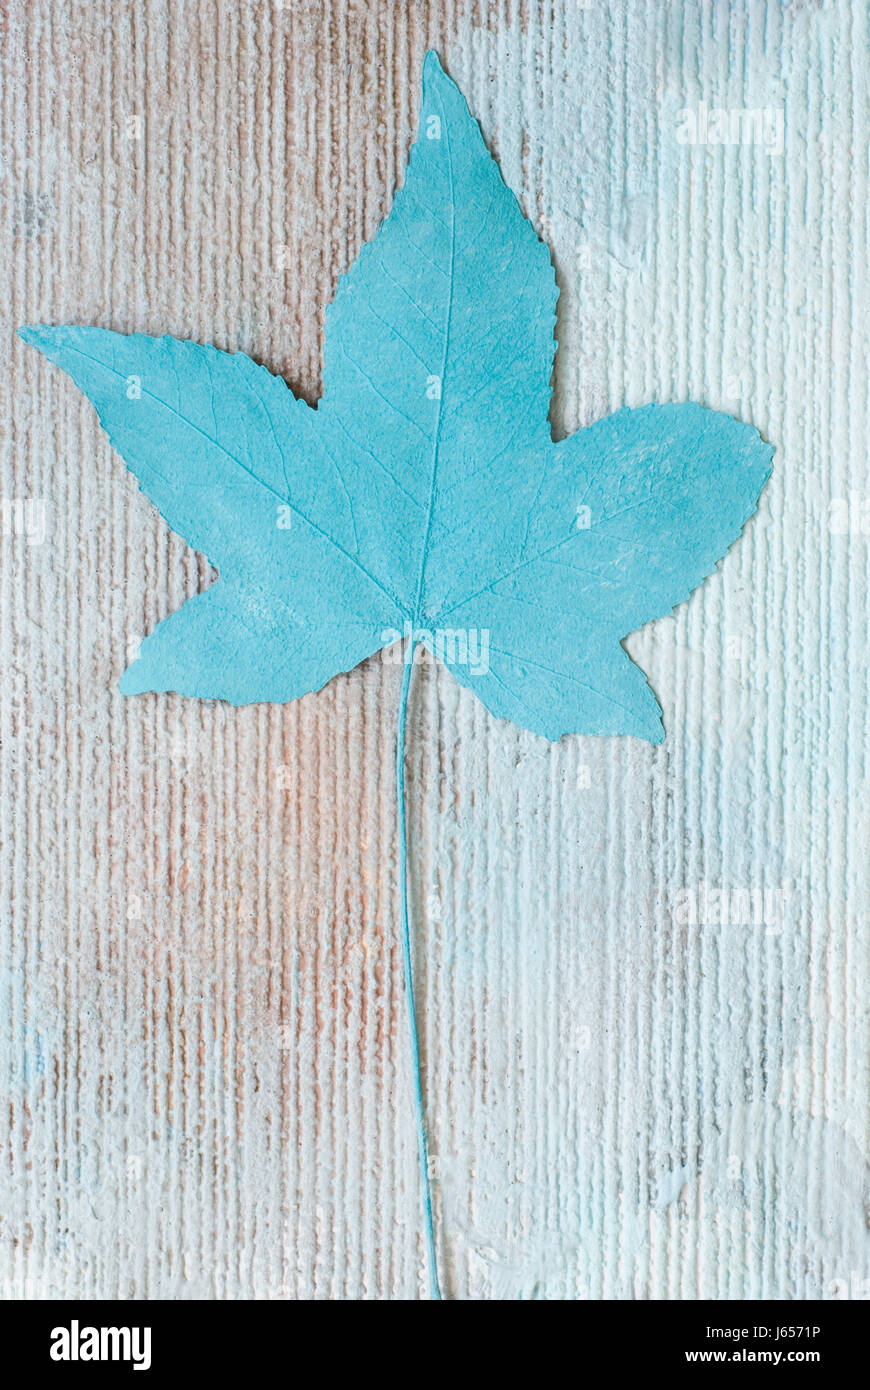 Ahorn Pastell Türkis blaues Blatt gedrückt Hintergrund Hintergrund blau Blatt Pastell Stockfoto